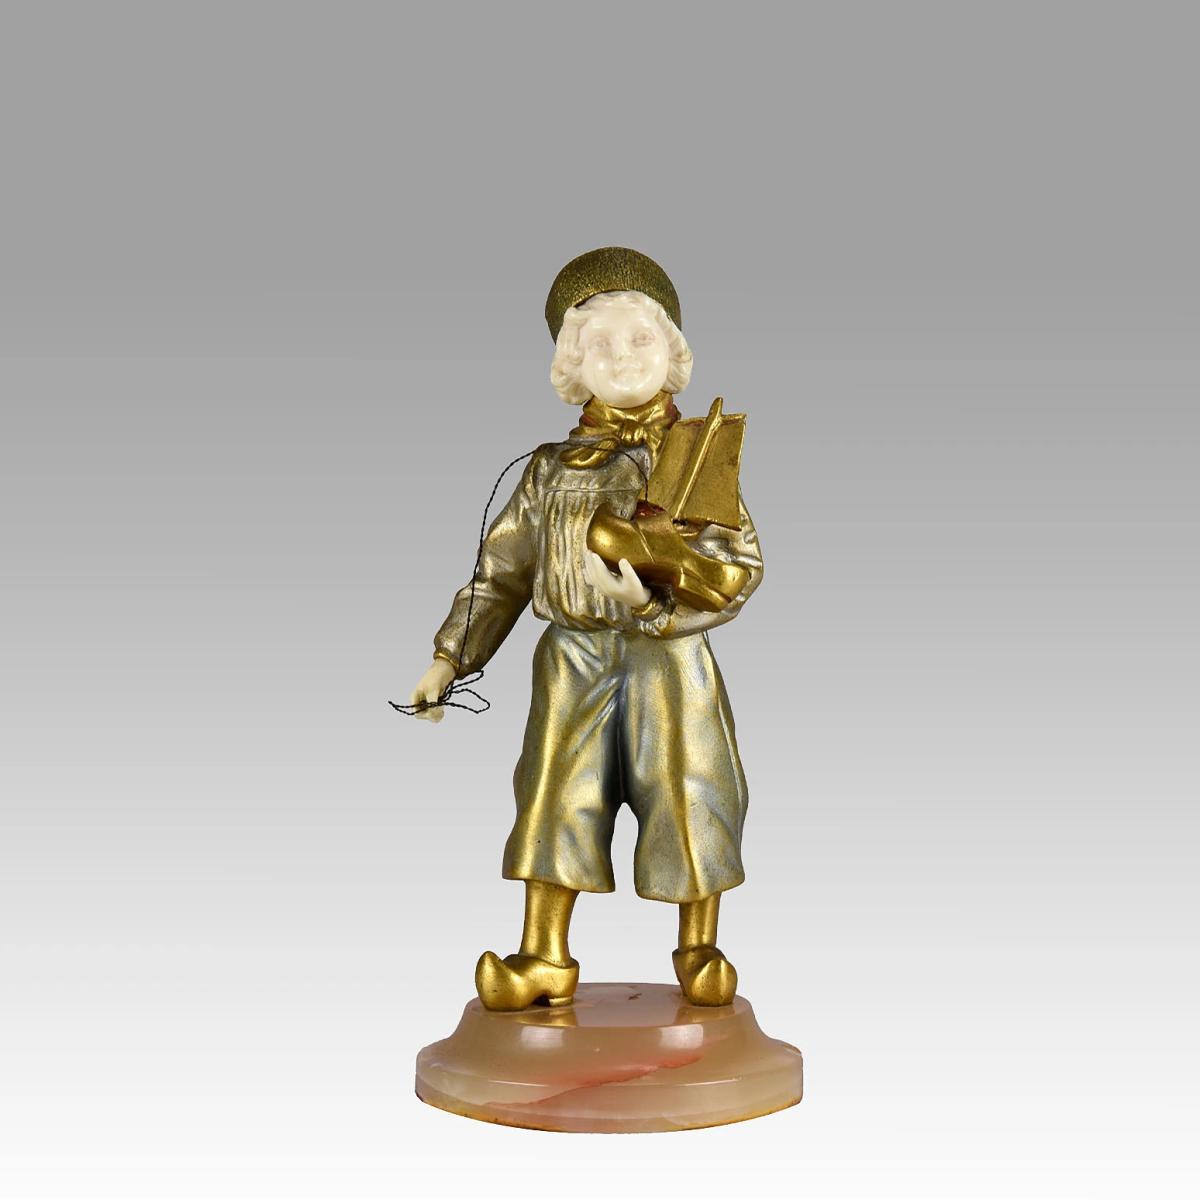 French Gilt Bronze & Ivory Sculpture entitled "Little Dutch Boy" by Marquet